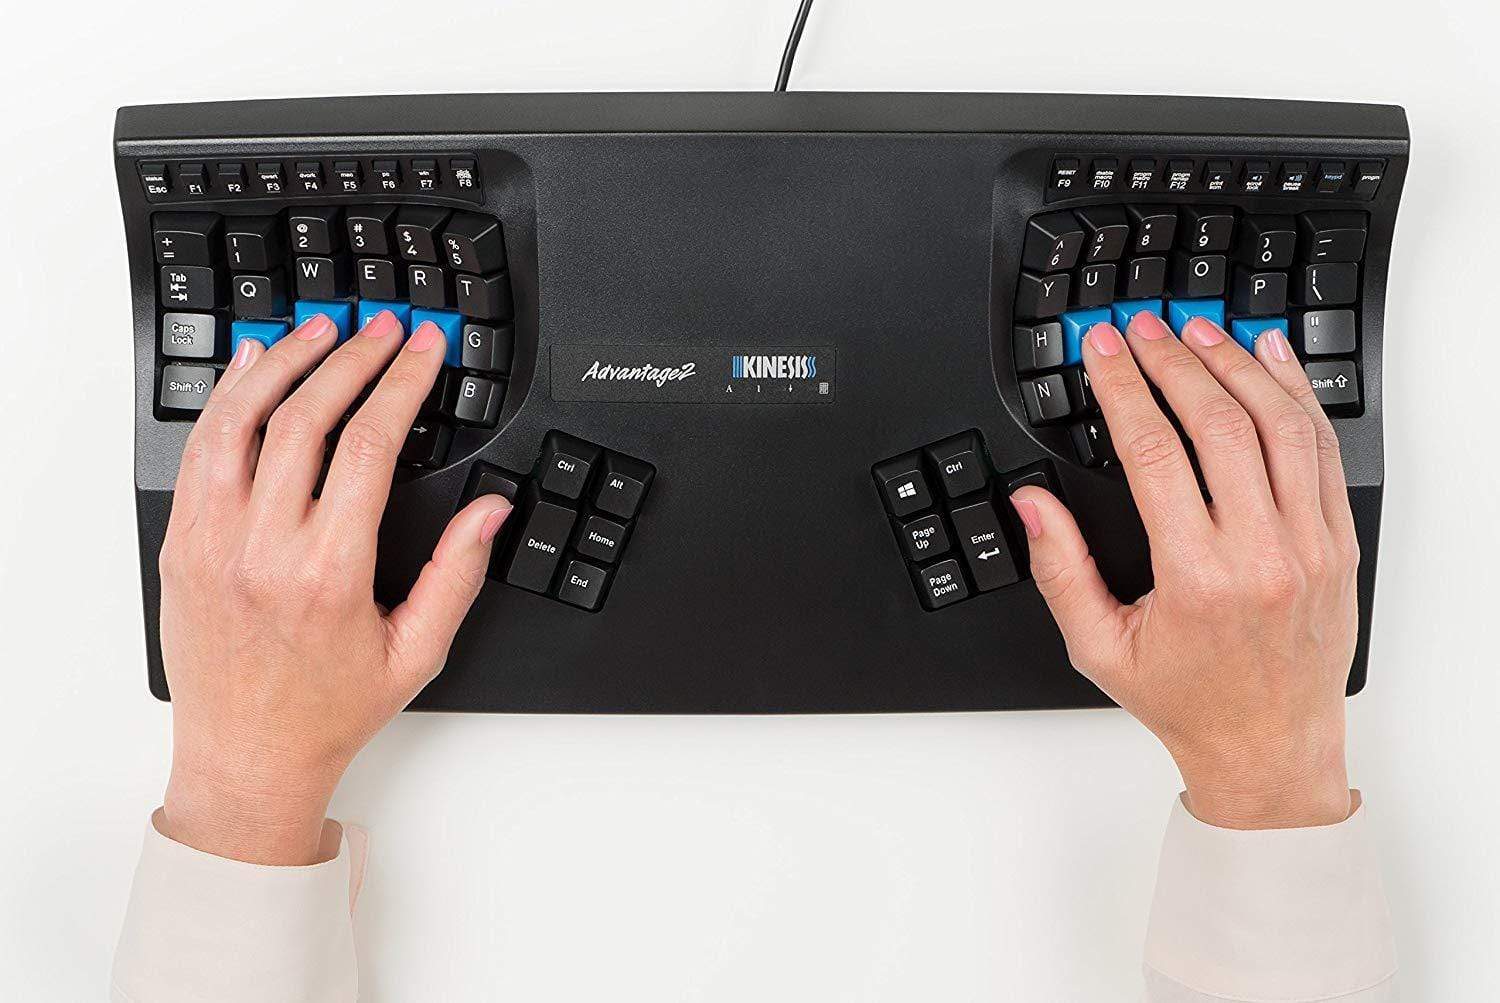 kinesis-keyboard-kinesis-advantage2-ergonomic-keyboard-kb600-free-2nd-day-air-shipping-4115027918953_1800x1800.jpg (1500×1003)